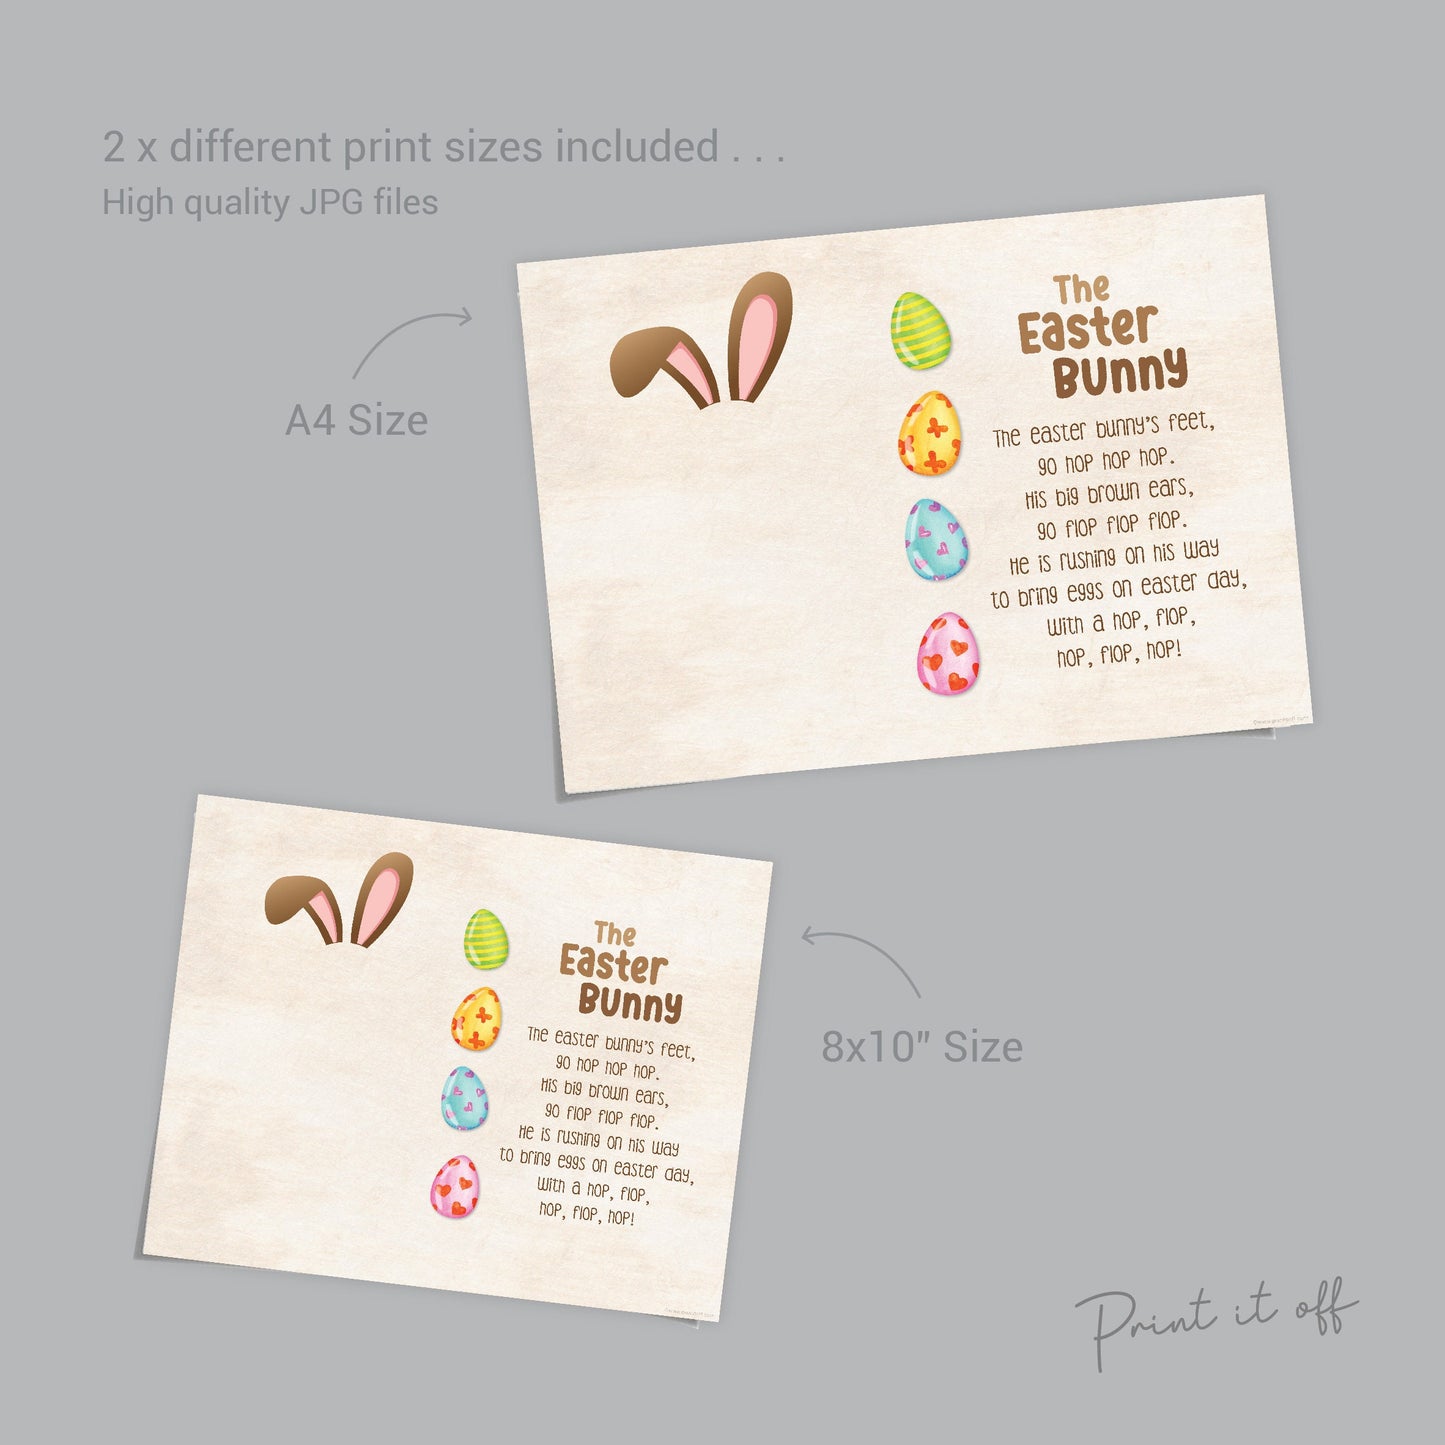 The Easter Bunny /  Footprint Foot Art Craft / Happy Easter Poem / Kids Baby Toddler / Activity Keepsake DIY Card / Print it off 0444